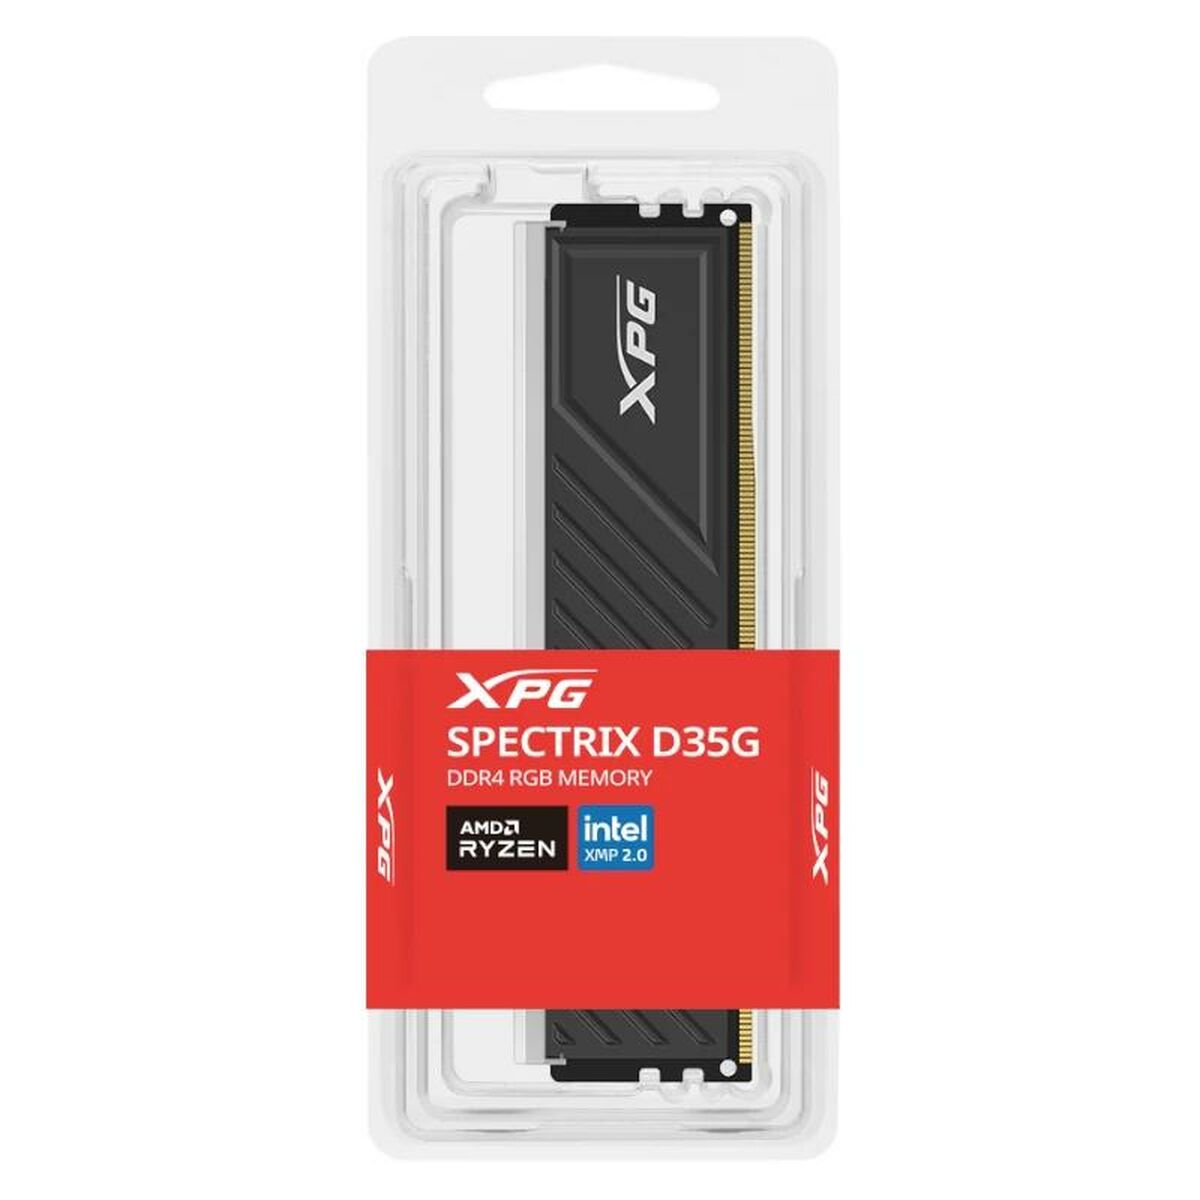 XPG SPECTRIX D35G DDR4 RGB RAM – High-Performance Memory Module